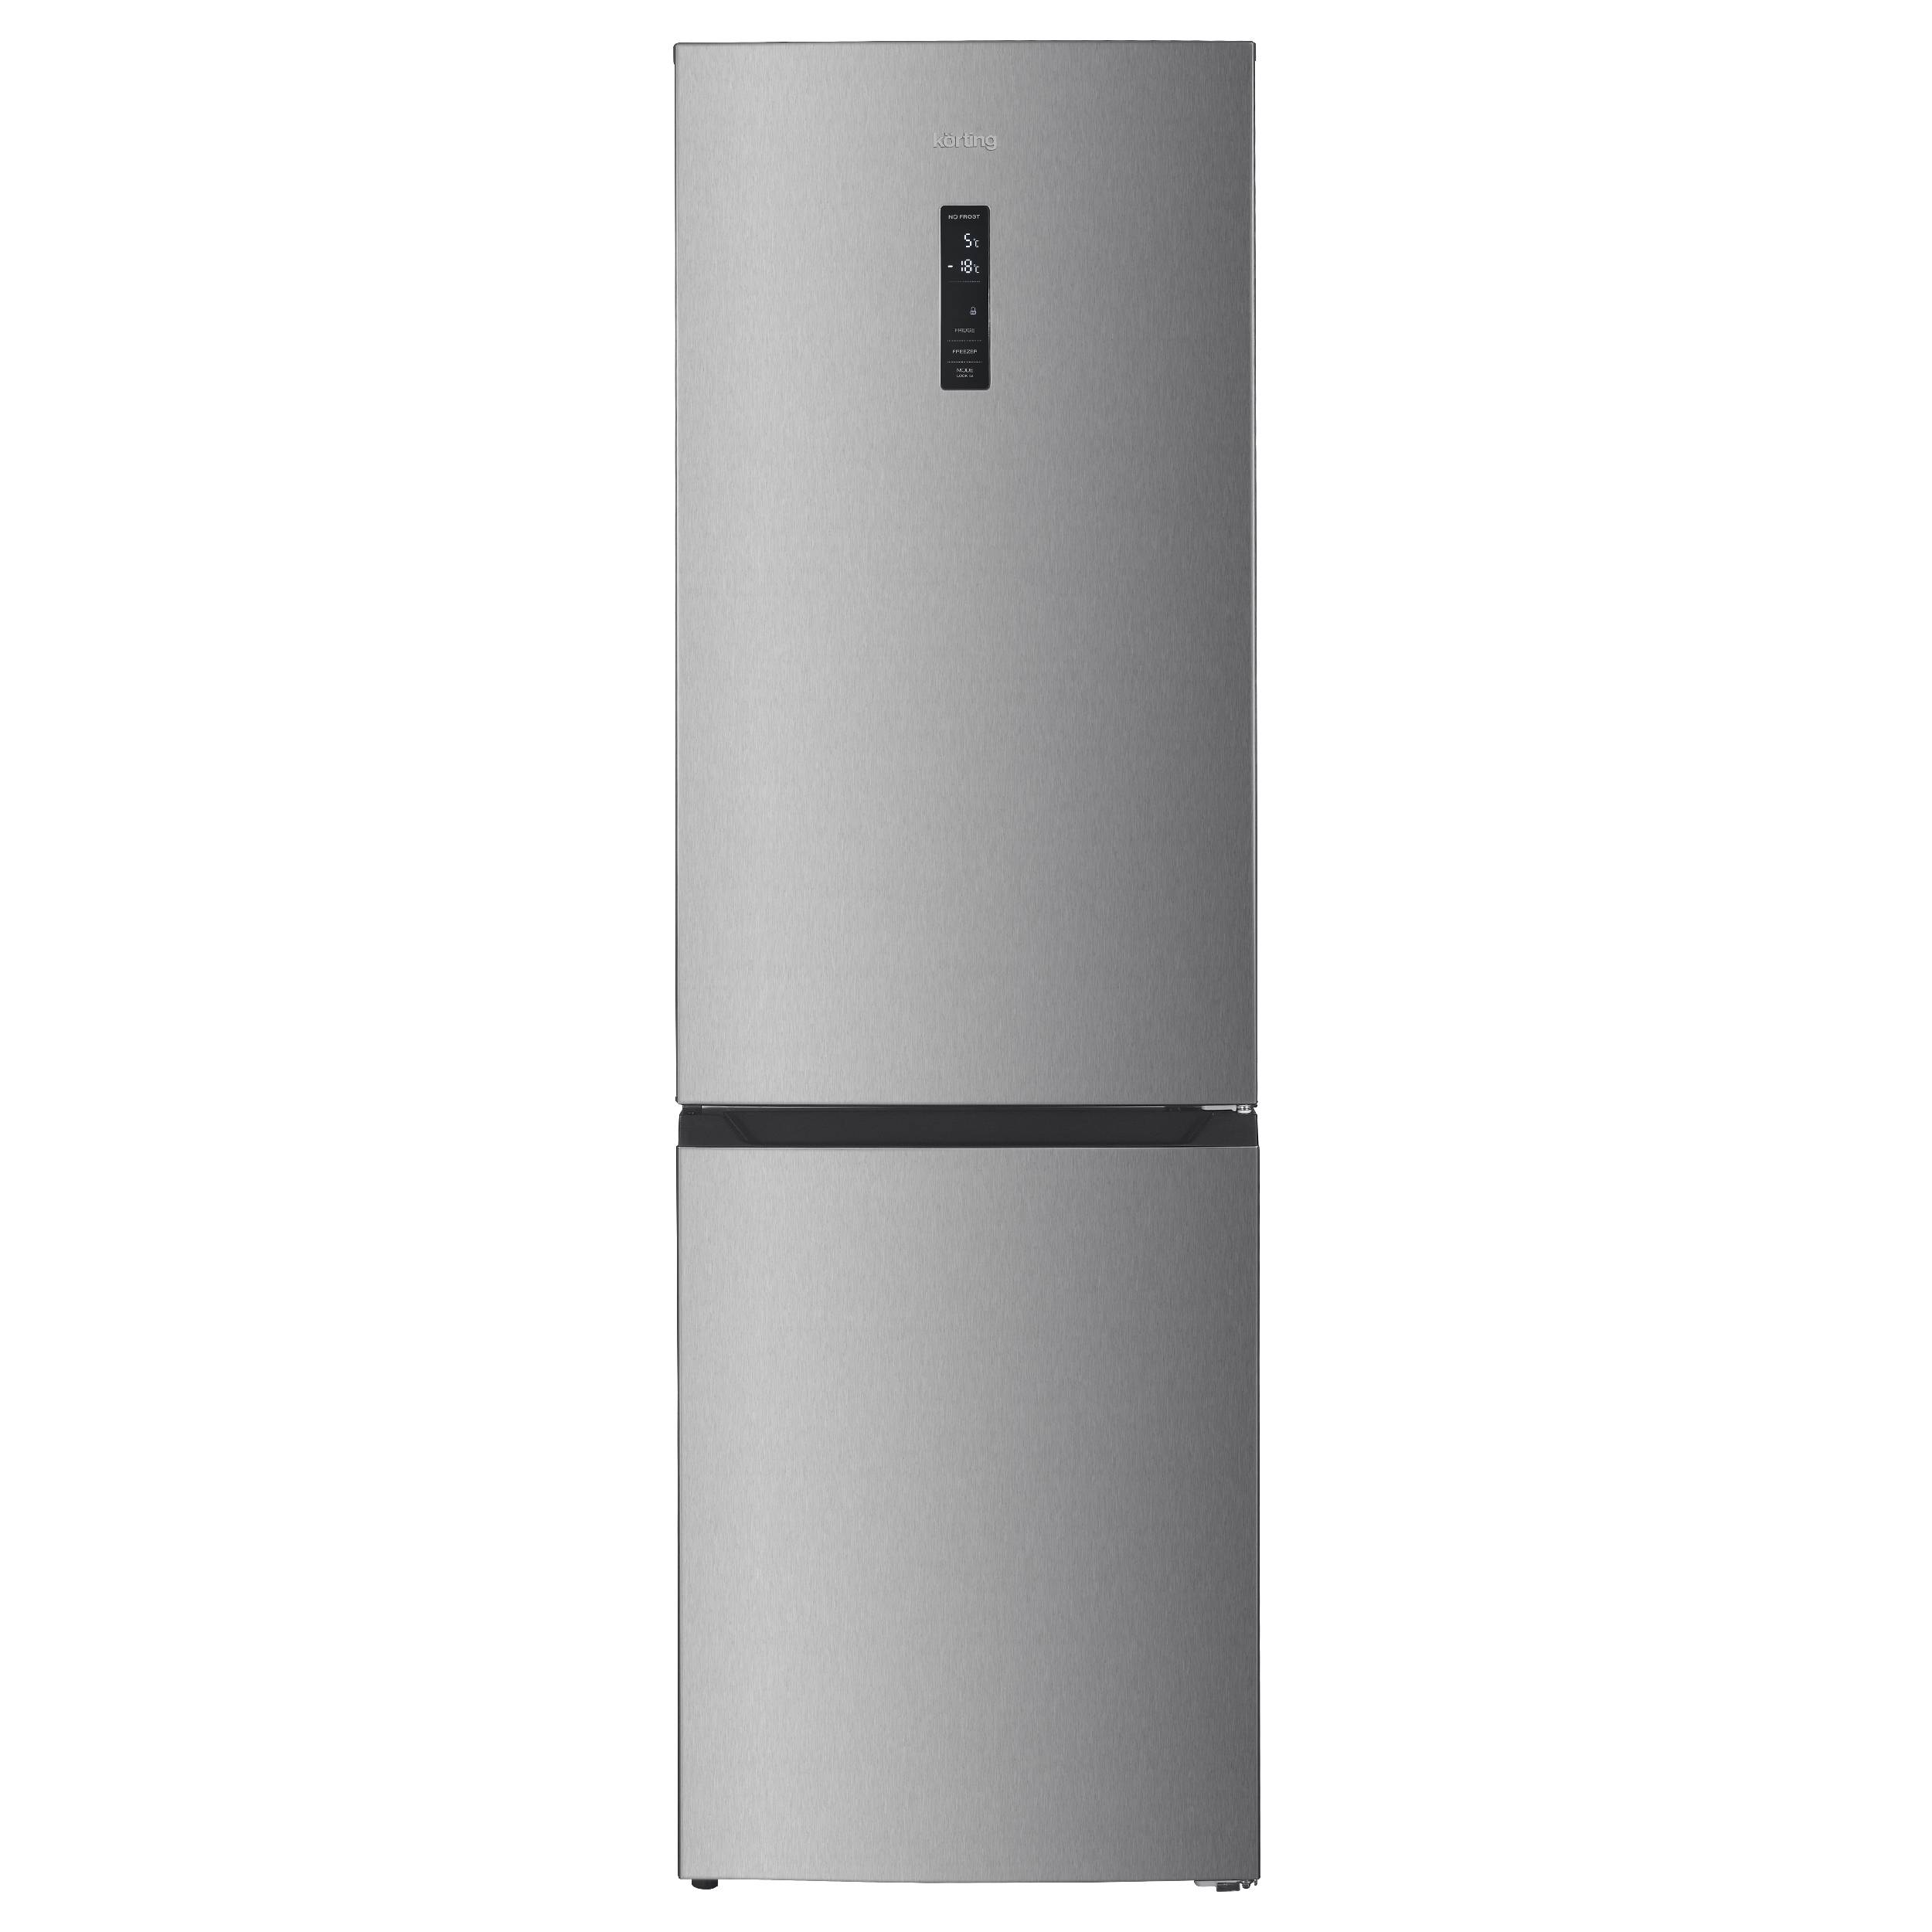 Холодильник Korting KNFC 62980 X серебристый, серый